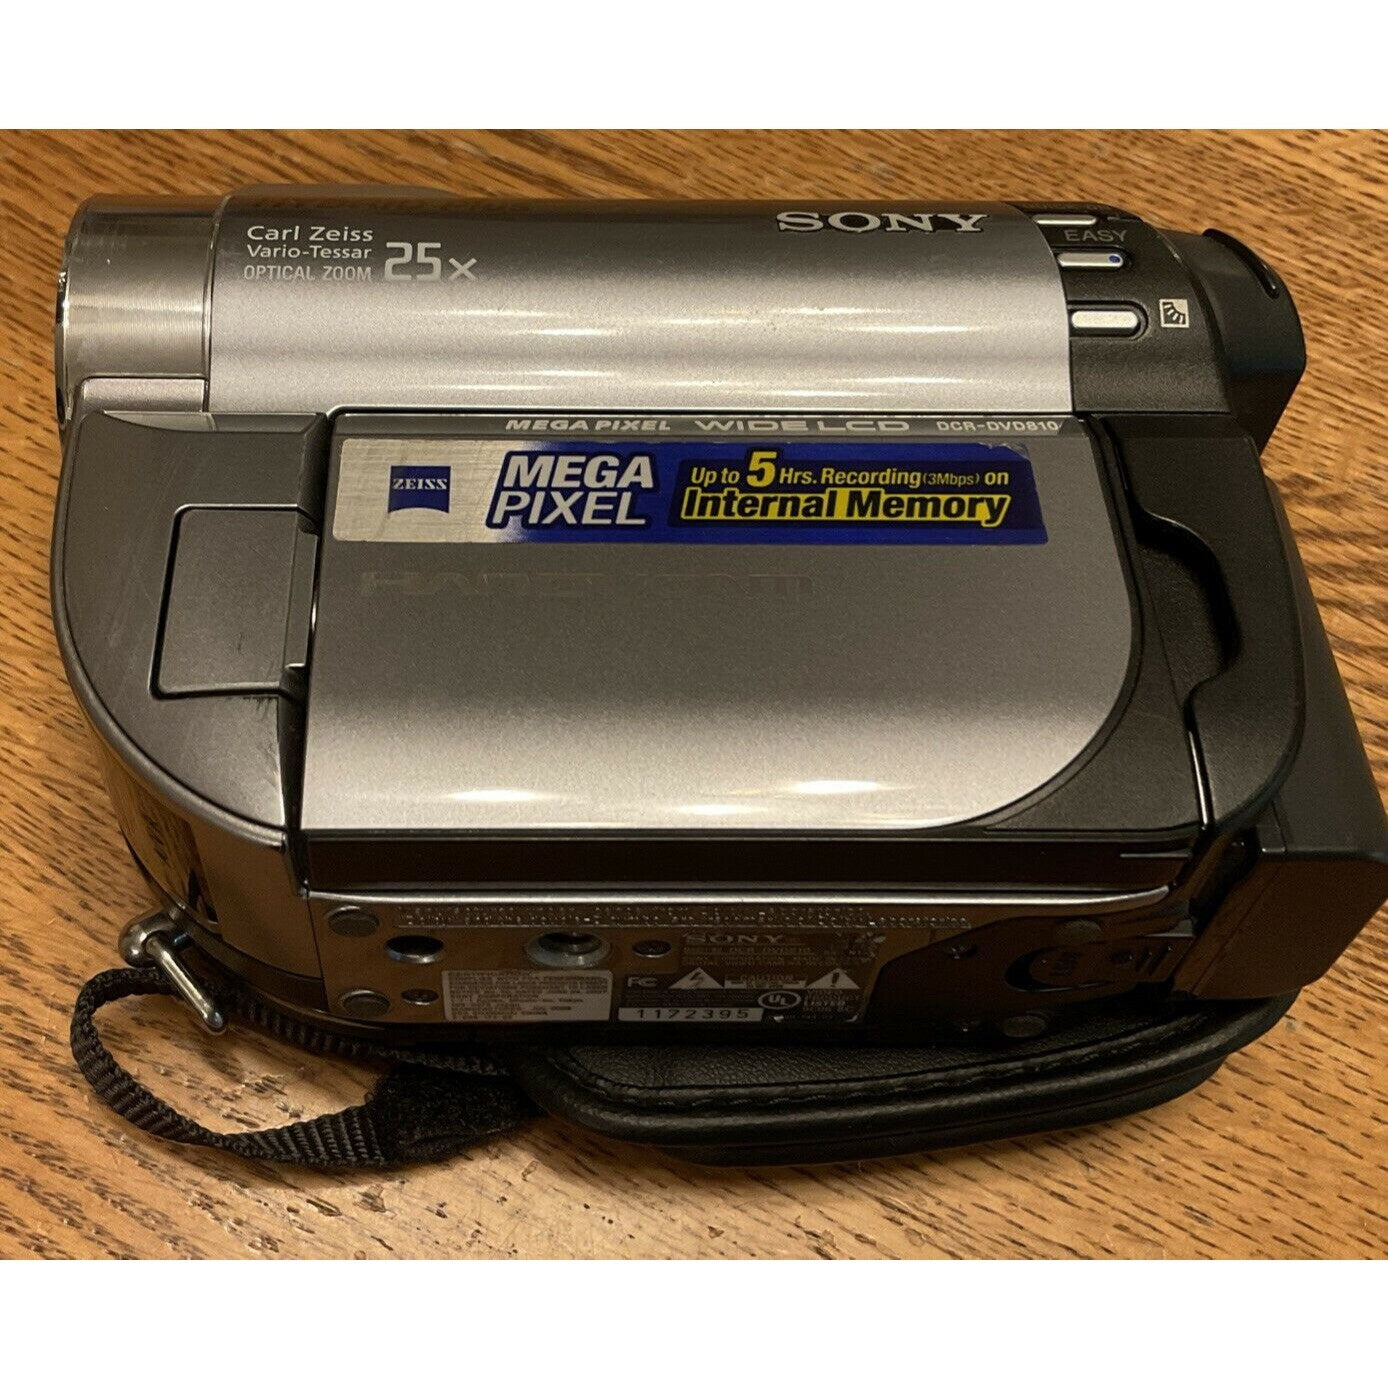 Sony DCR-DVD810 Handycam Camcorder